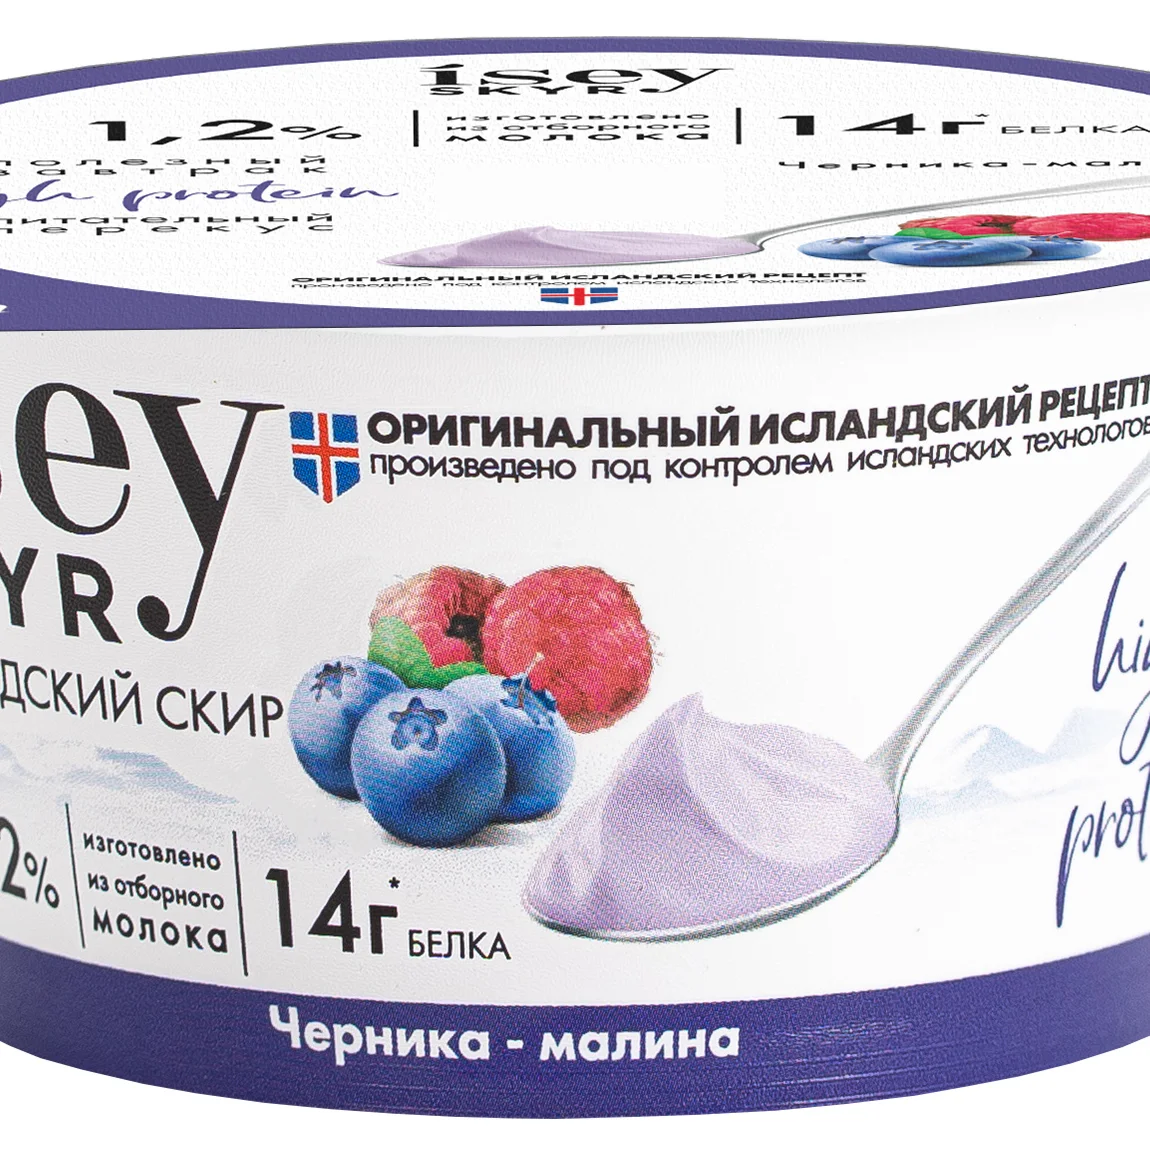 Blueberry-Raspberry yogurt